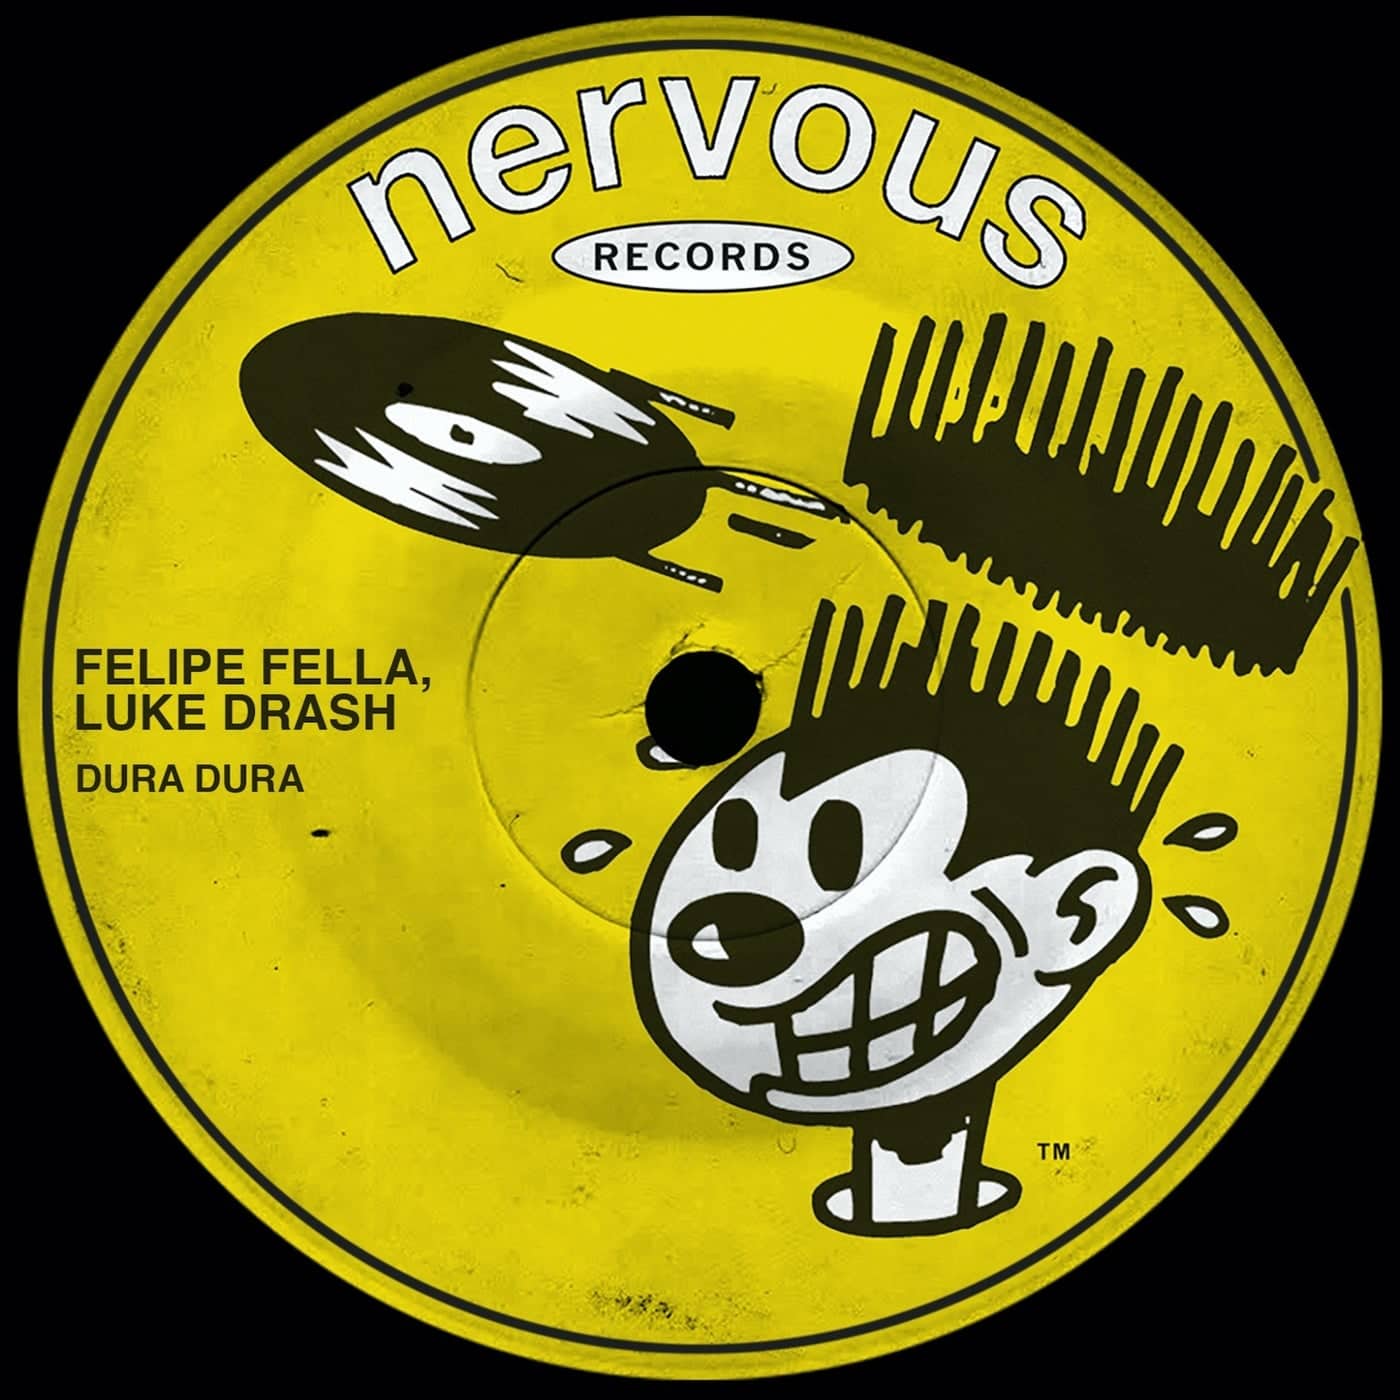 Download Felipe Fella, Luke Drash - Dura Dura on Electrobuzz